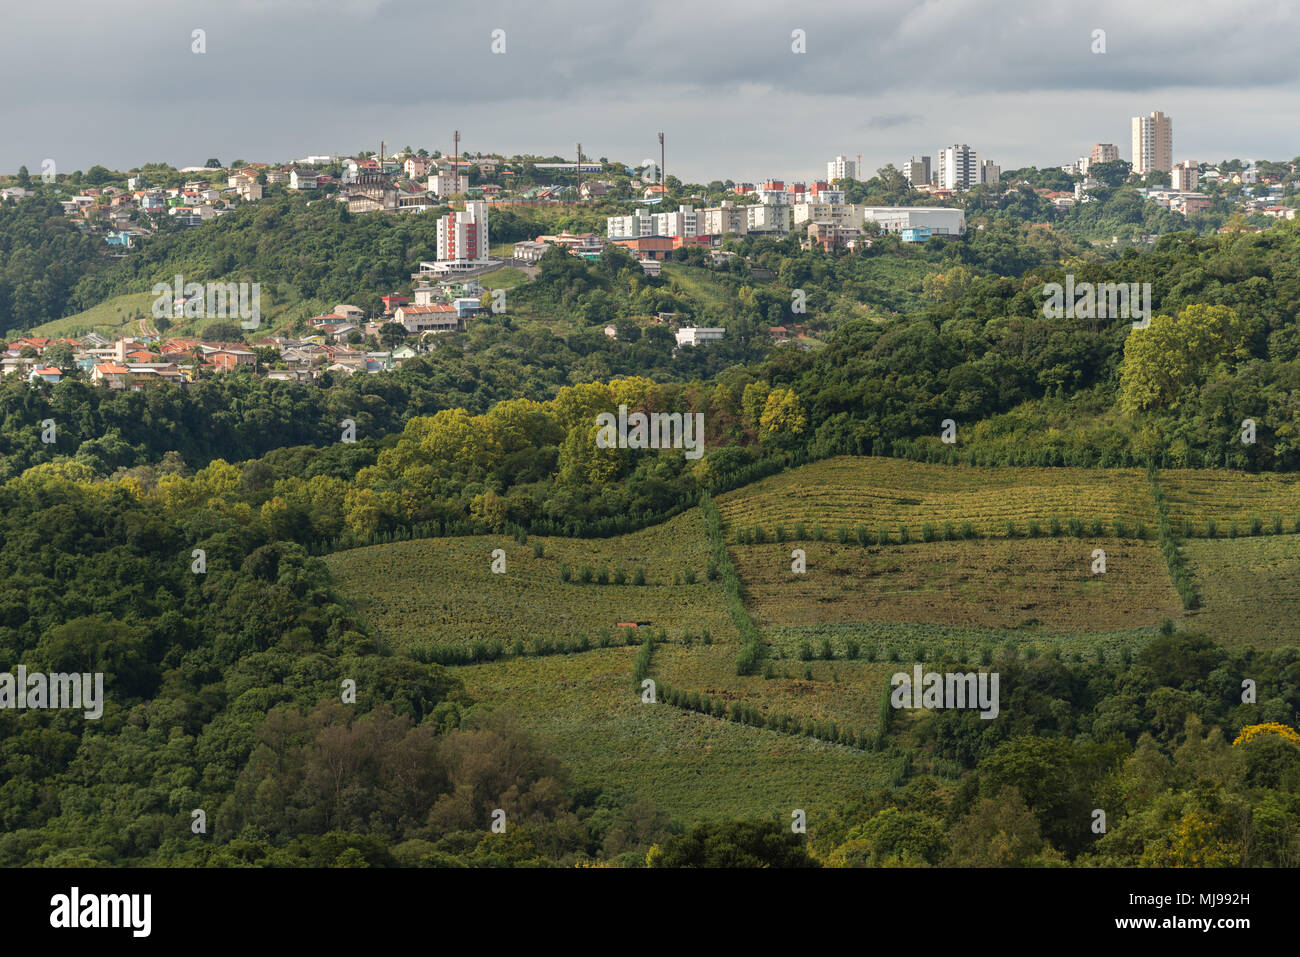 The wine valley 'Vale dos Vinhedos' with the town of Bento Goncalves, Rio Grande do Sul, Brazil, Latin America Stock Photo